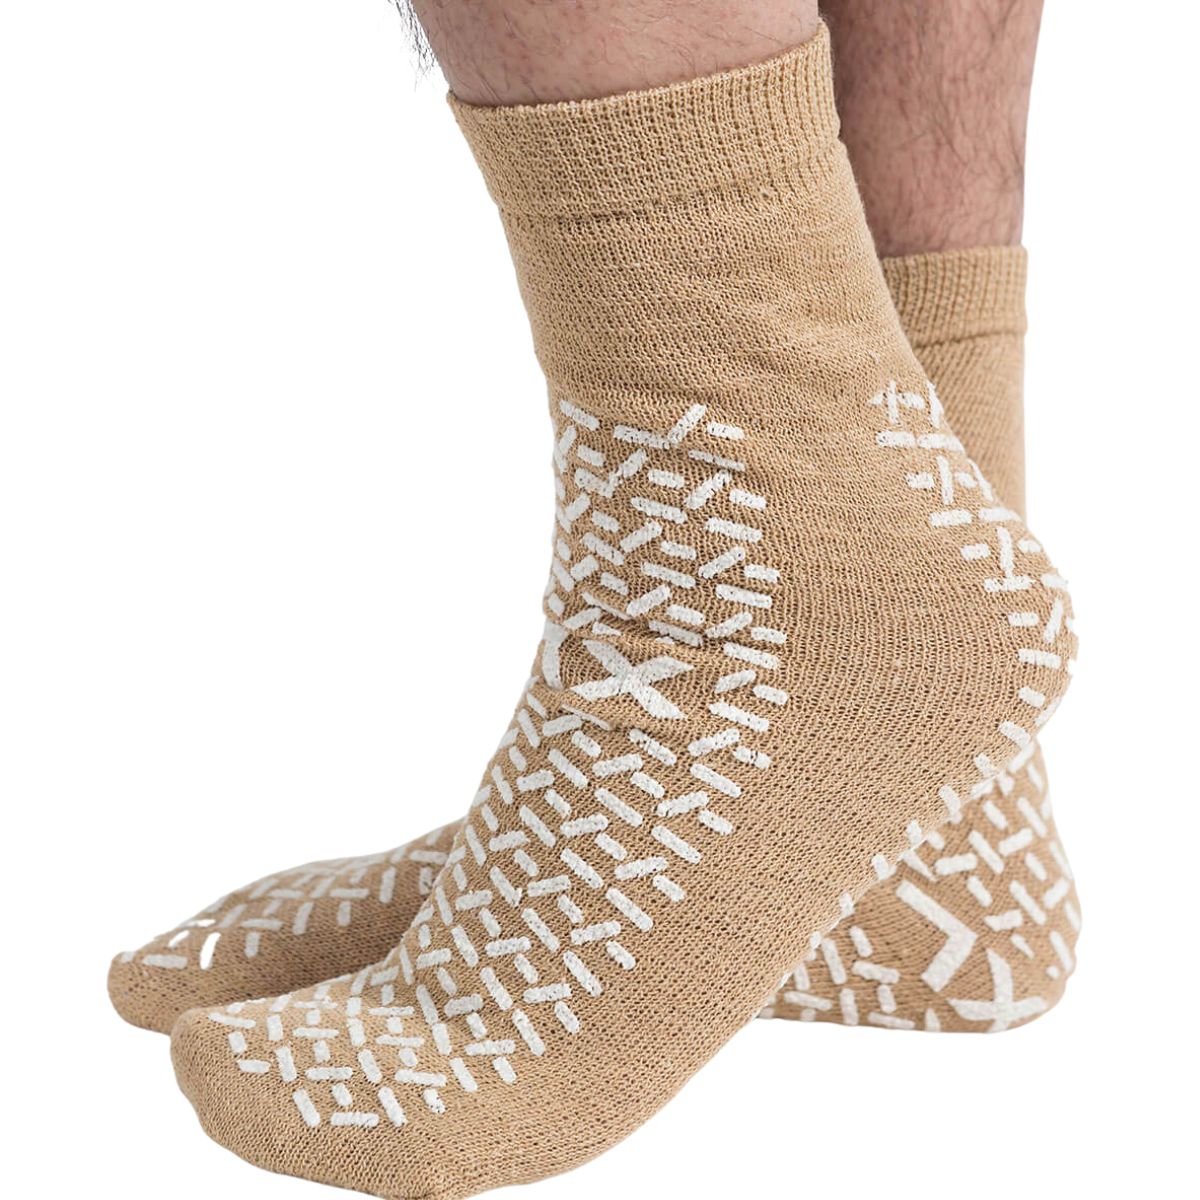 Gripperz Non-slip socks – Caring Clothing